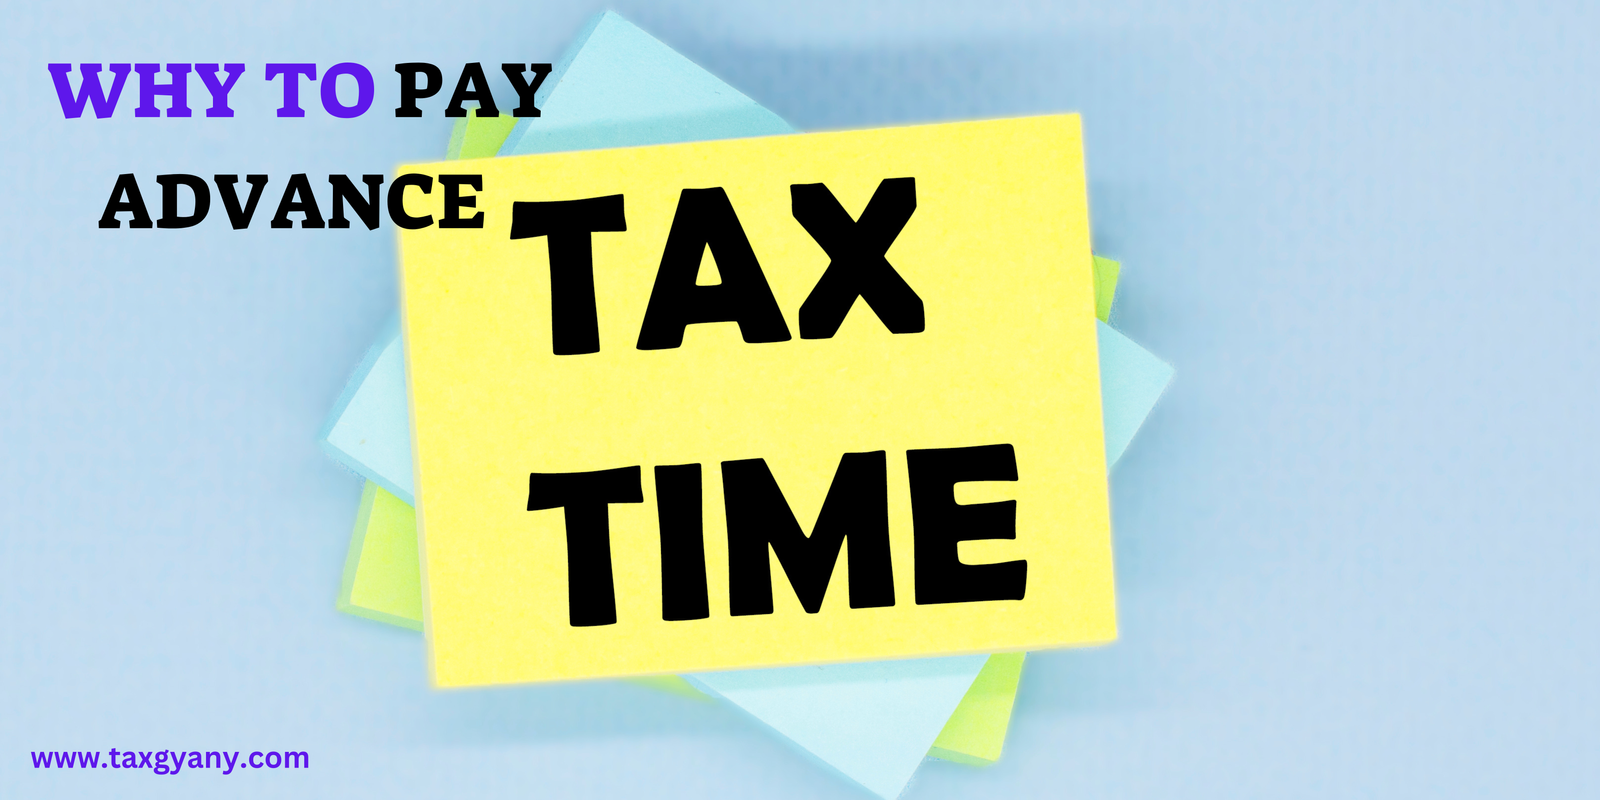 Pay Advance Tax